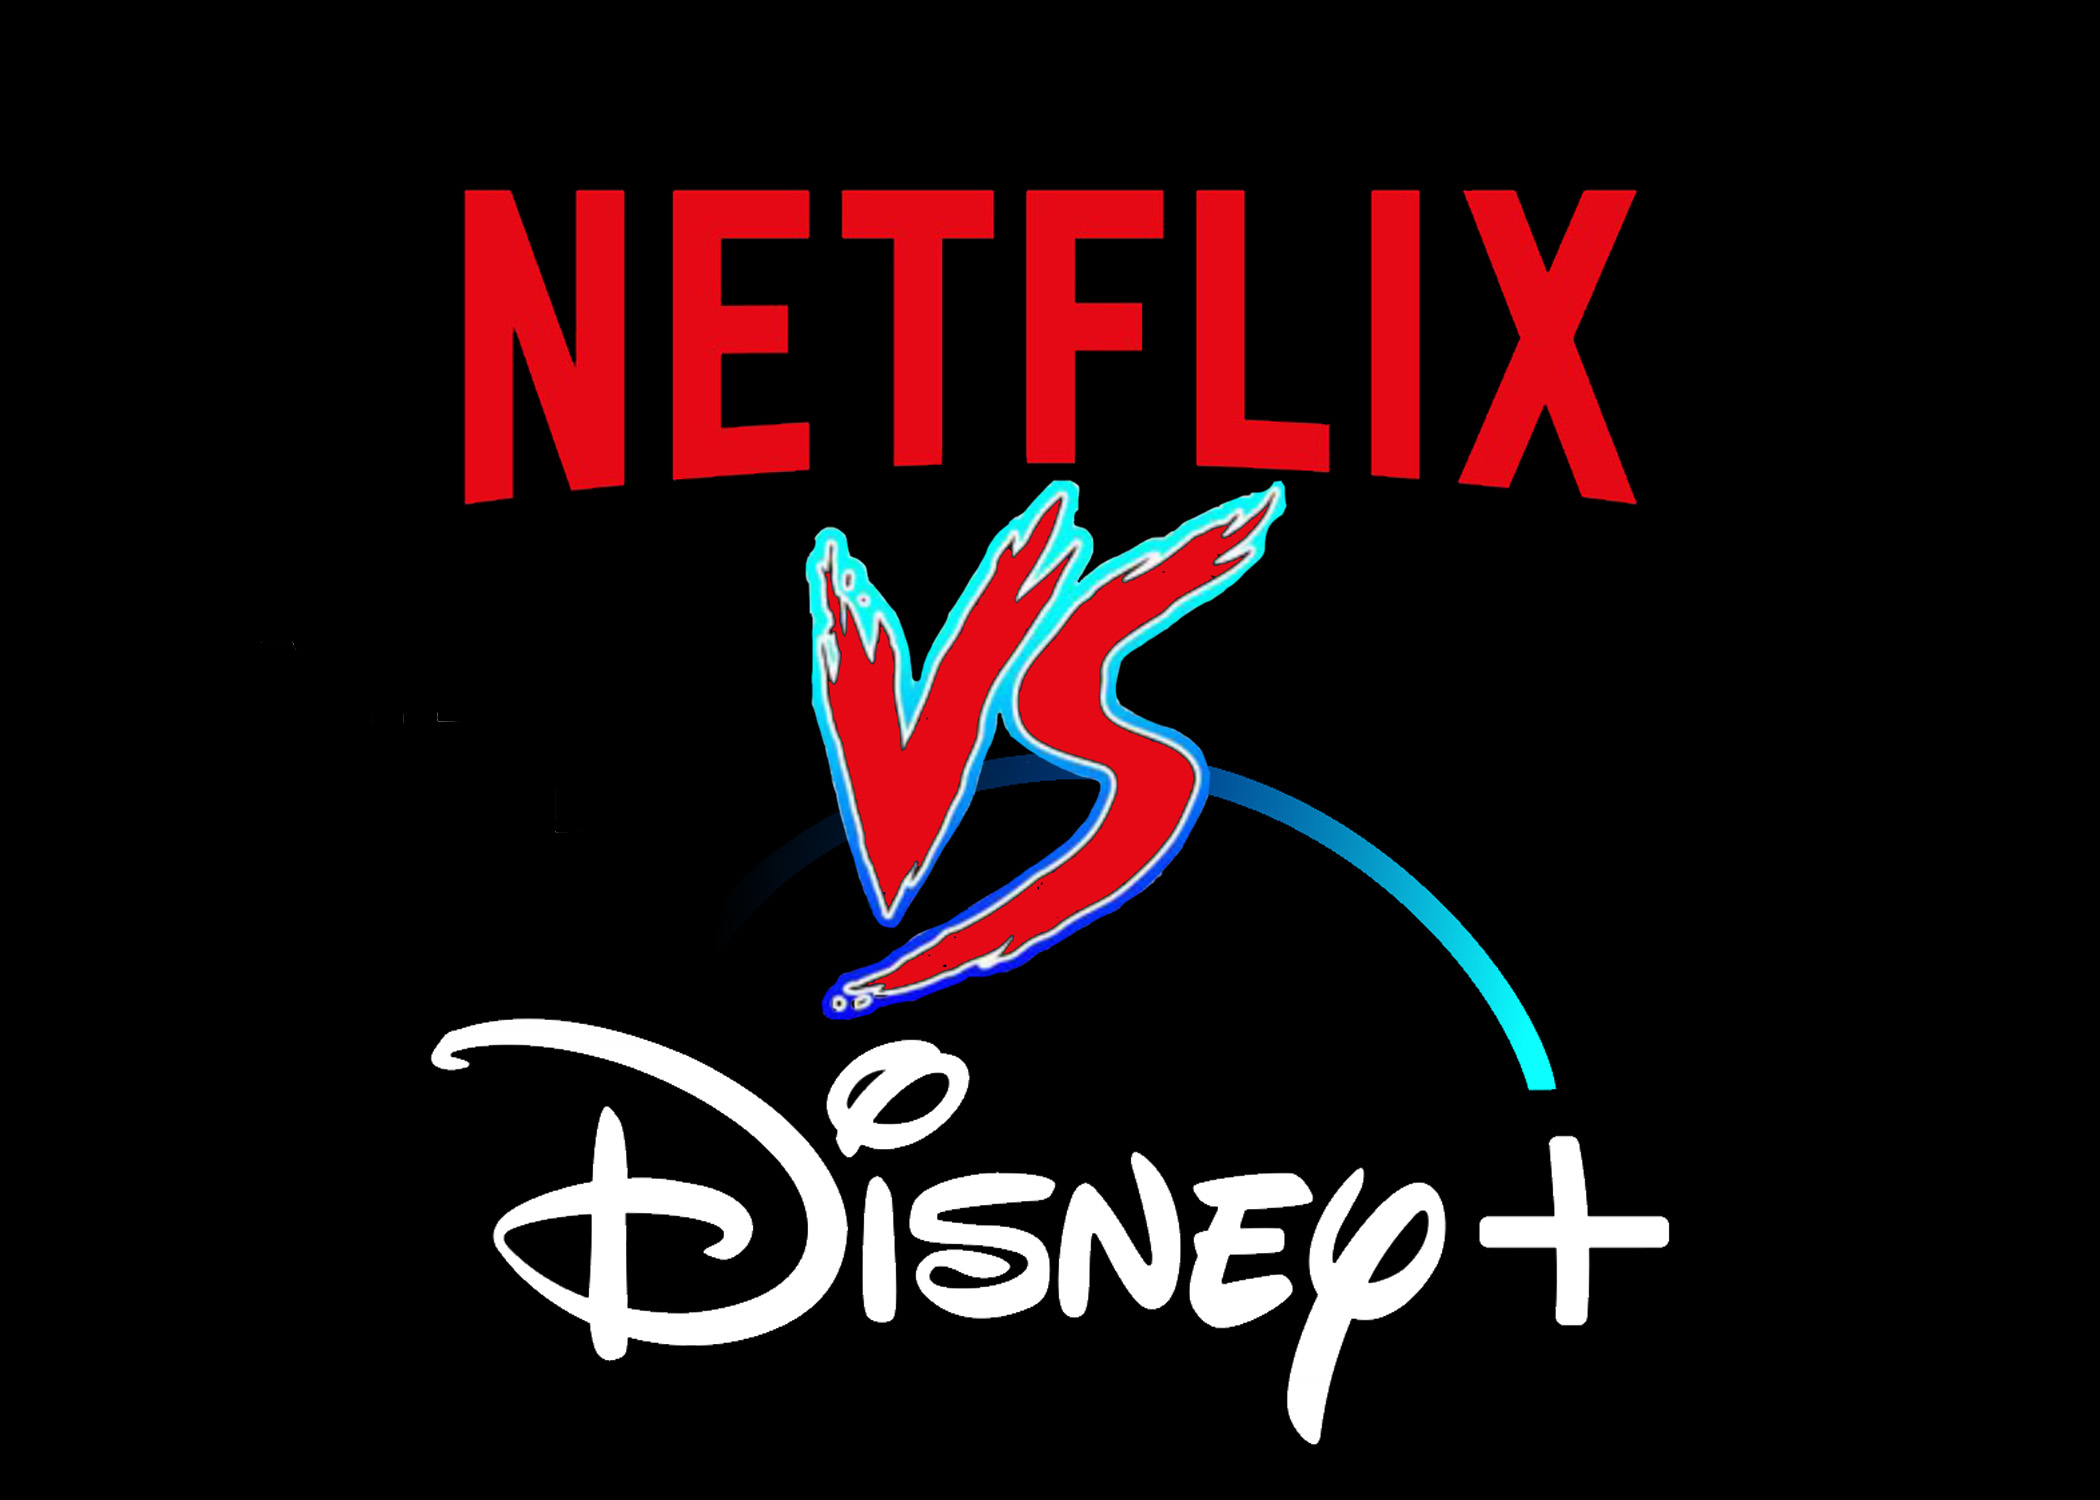 Disney+ Vs Netflix The First True Streaming Wars Begins May 27th